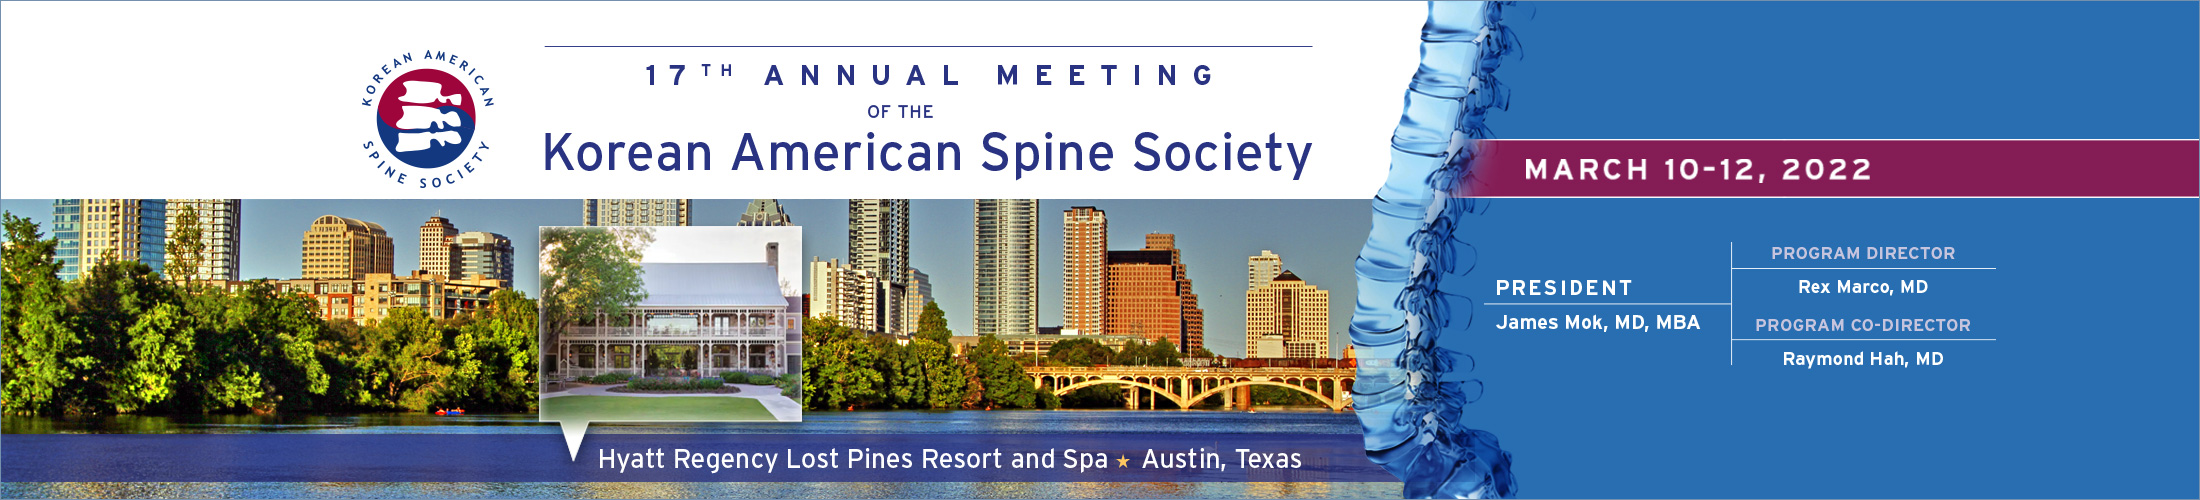 KASS-Korean American Spine Society Annual Meeting-2022